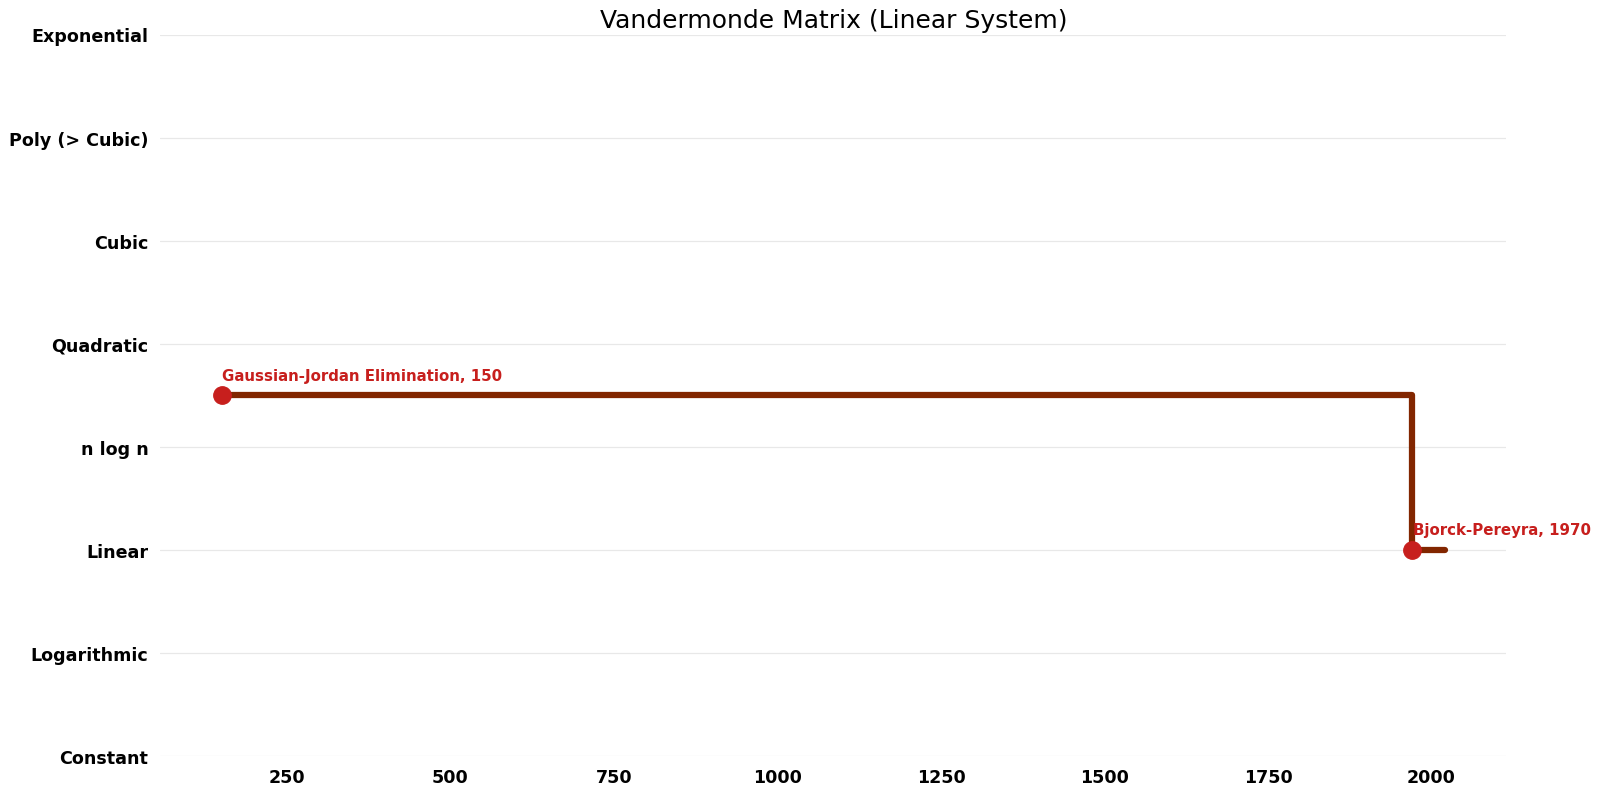 File:Linear System - Vandermonde Matrix - Time.png